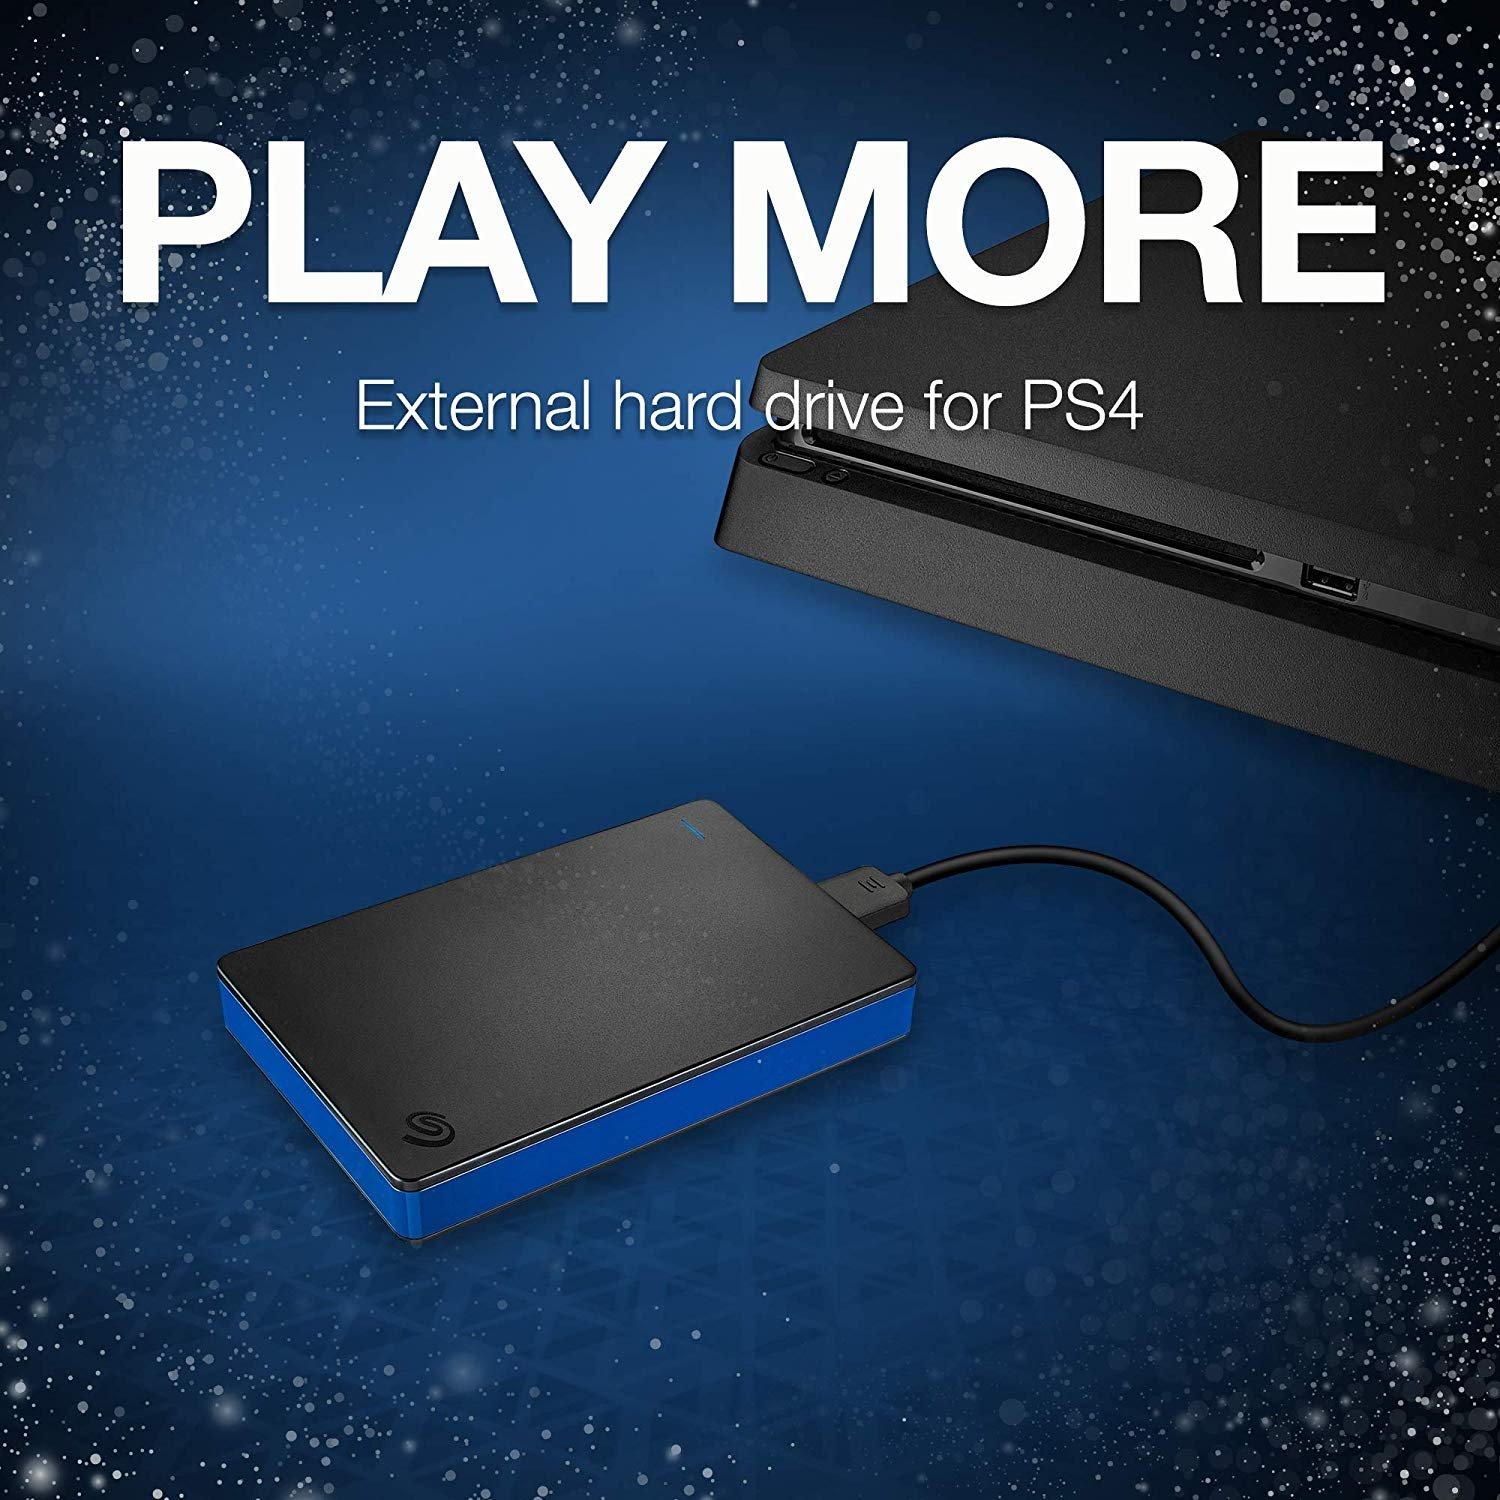 playstation 4 external hard drive gamestop